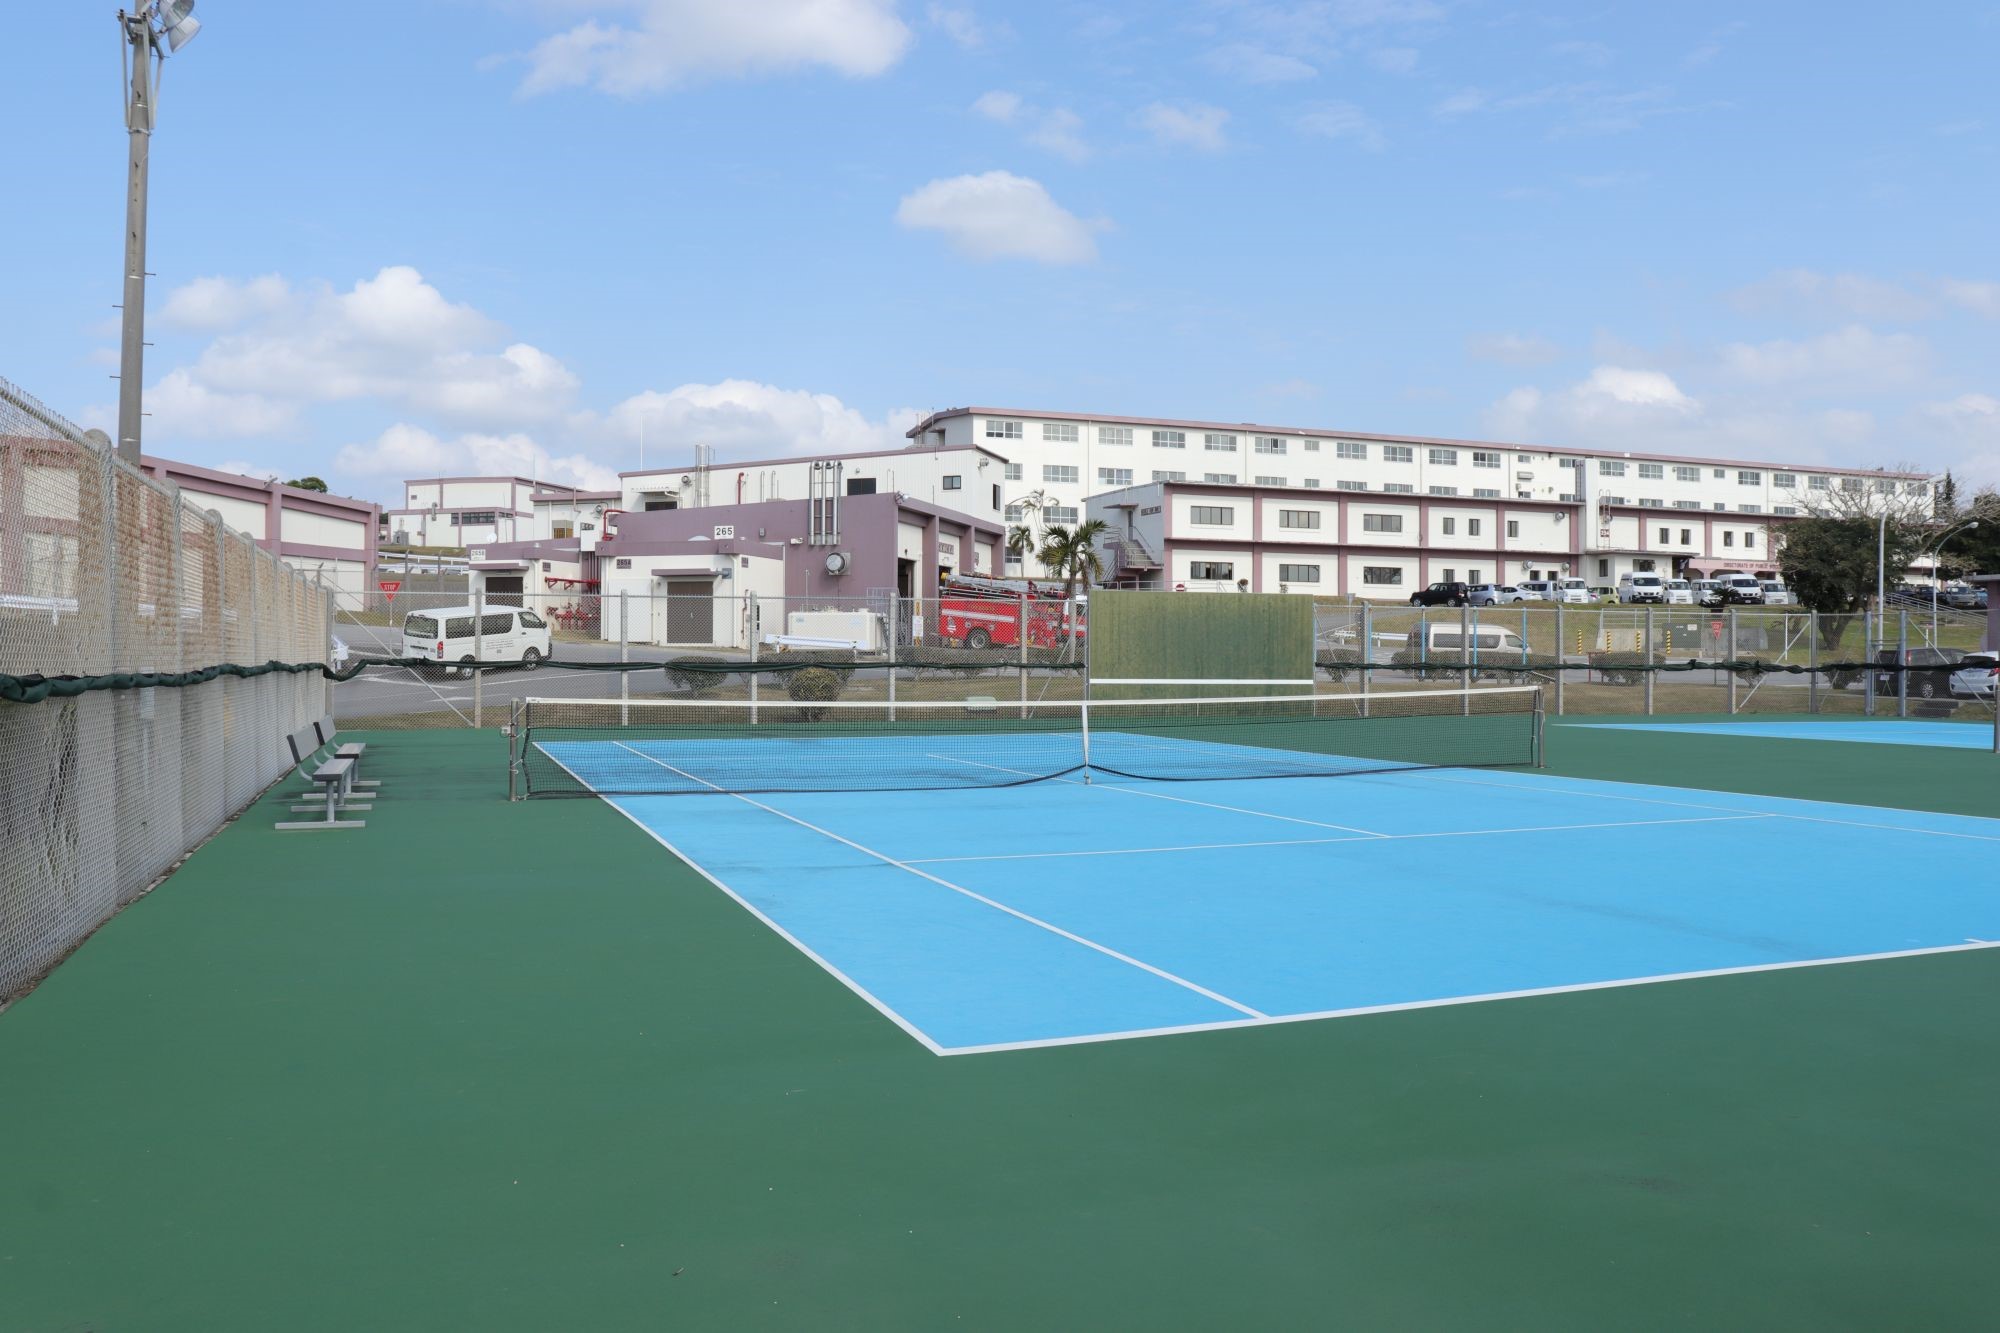 Tennis Court.jpg